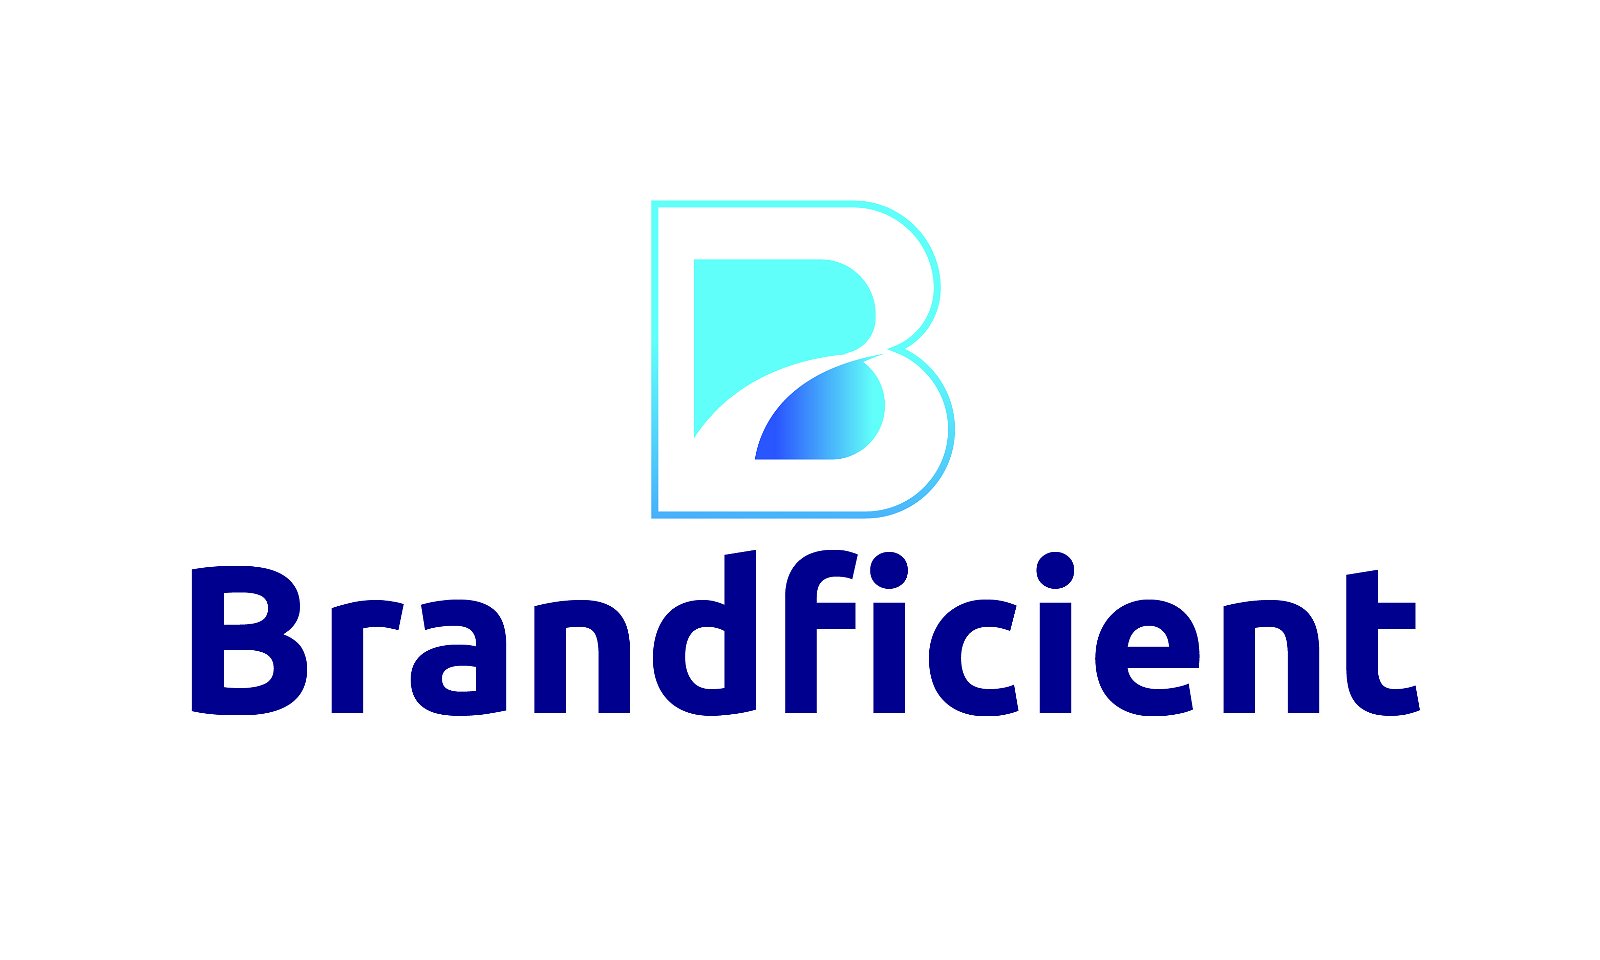 Brandficient.com - Creative brandable domain for sale